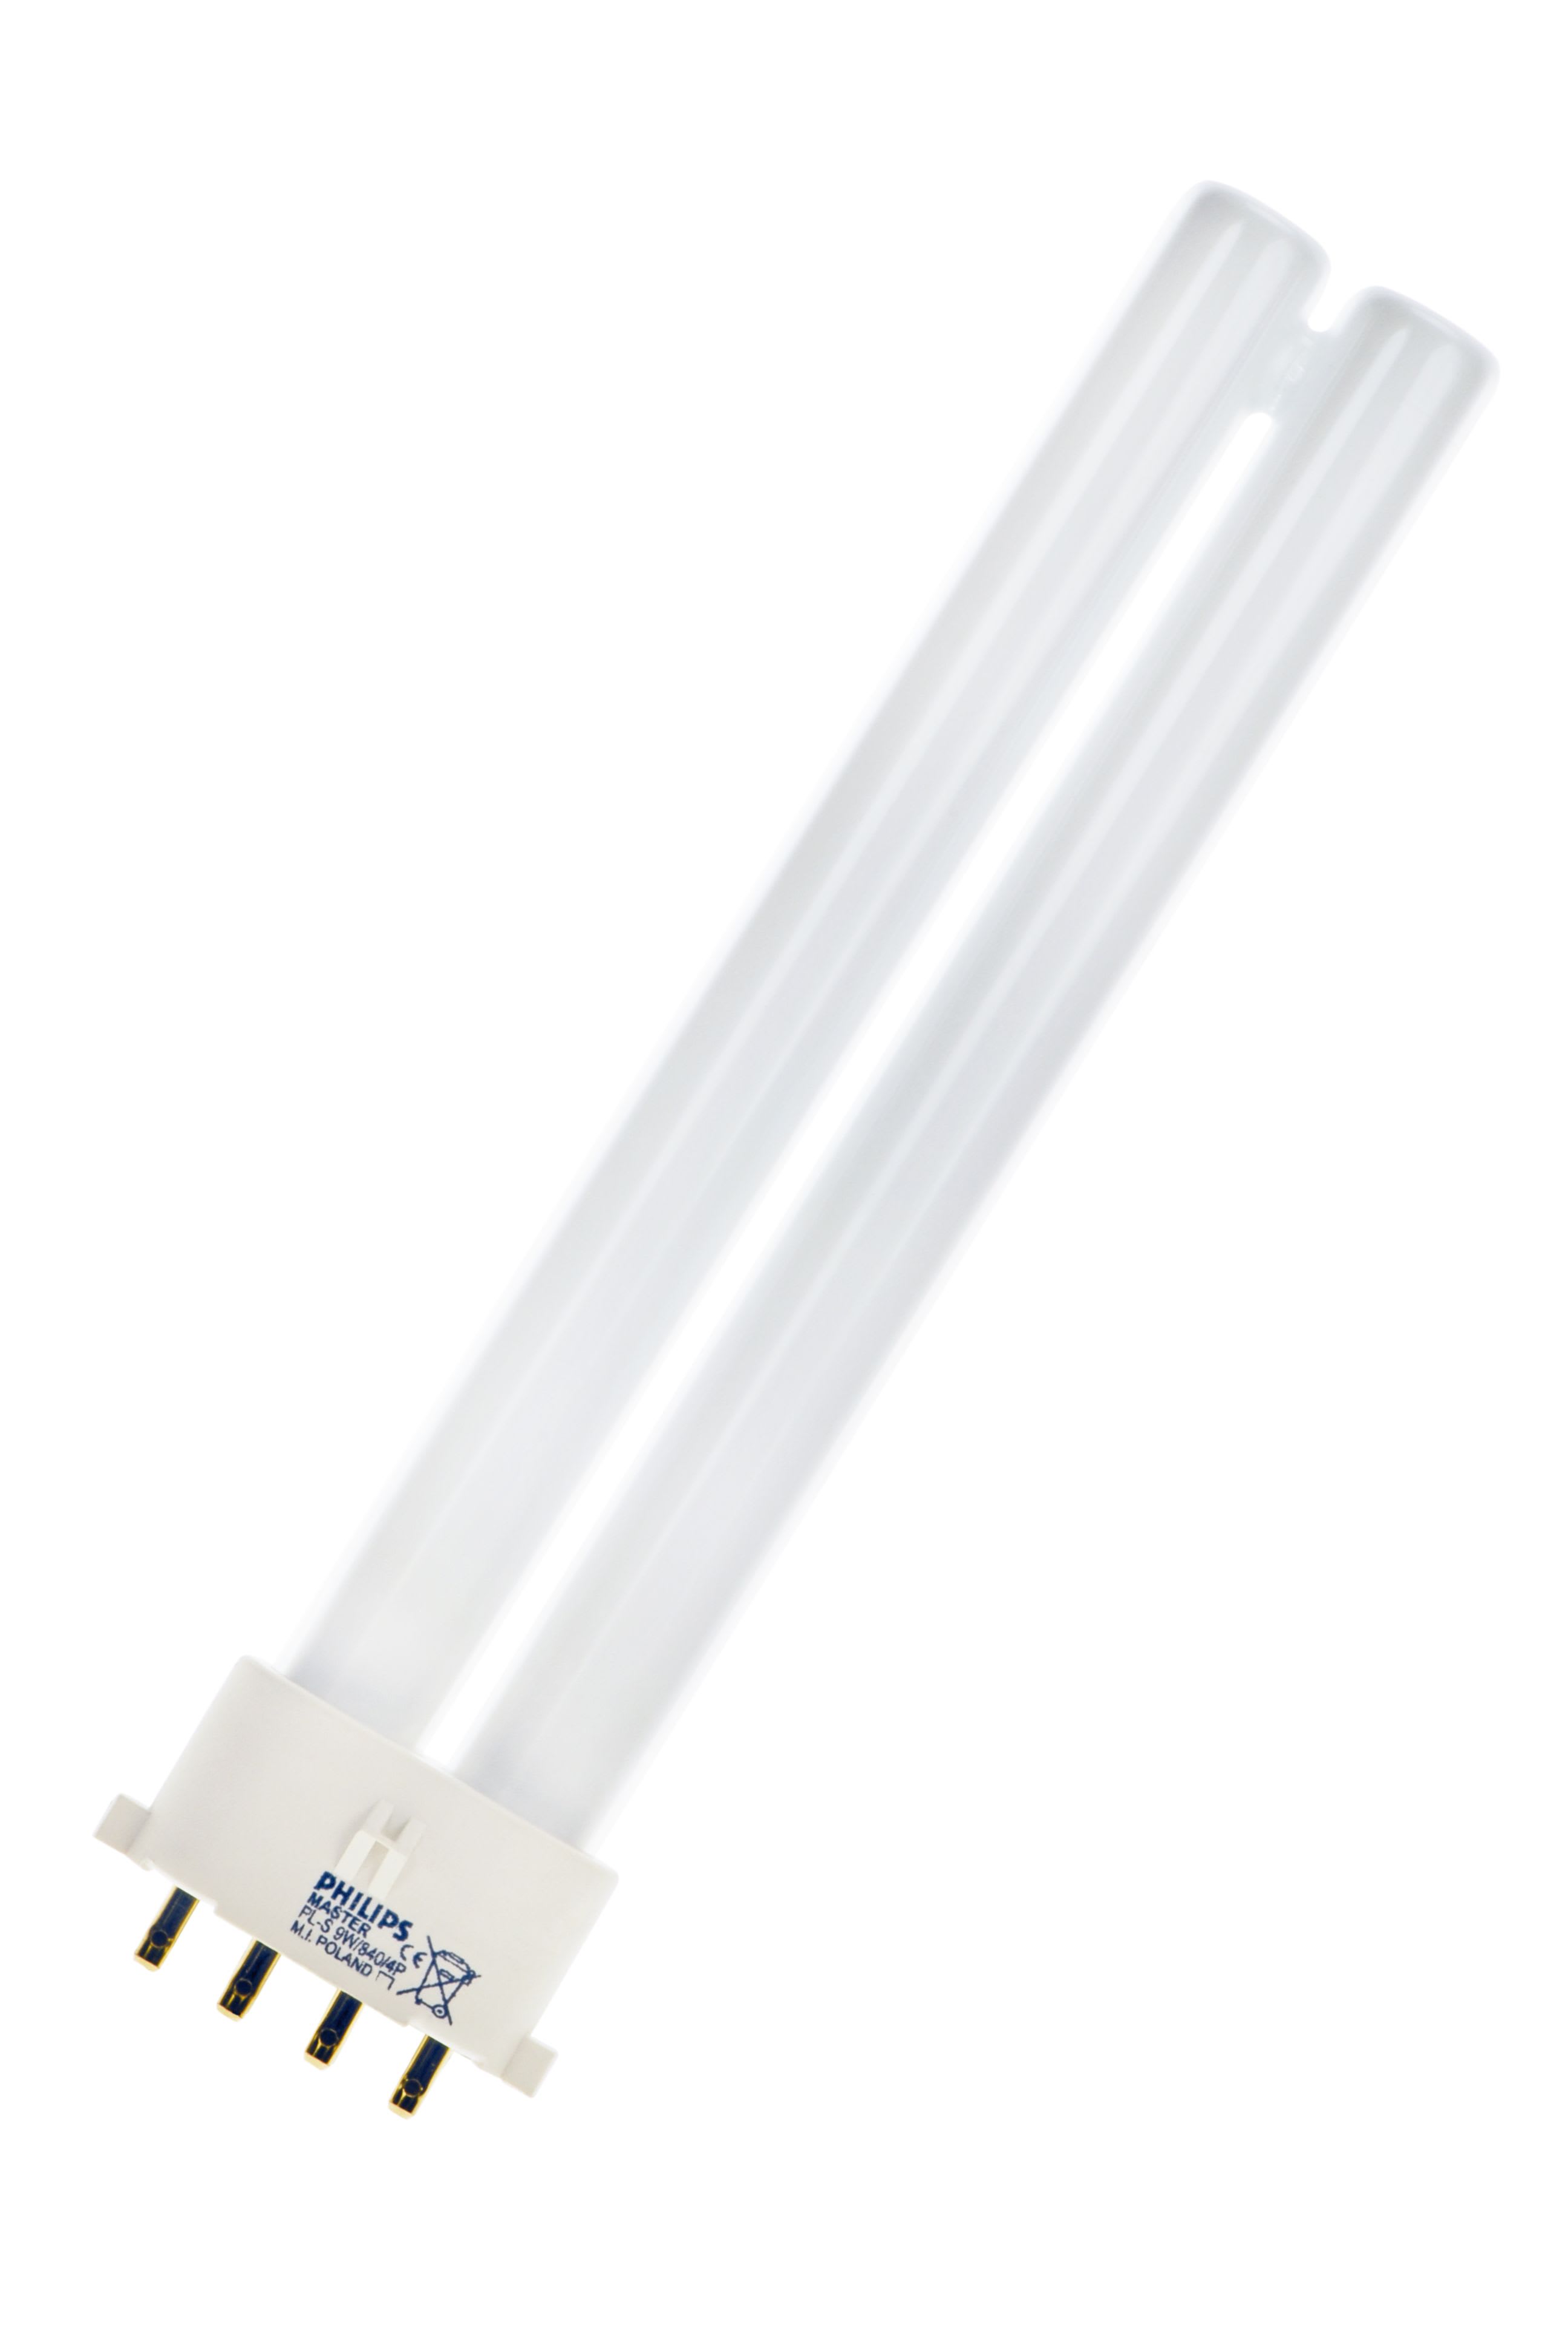 Bailey - PHI Lampe fluocompacte MASTER PL-S 11W/827/4P